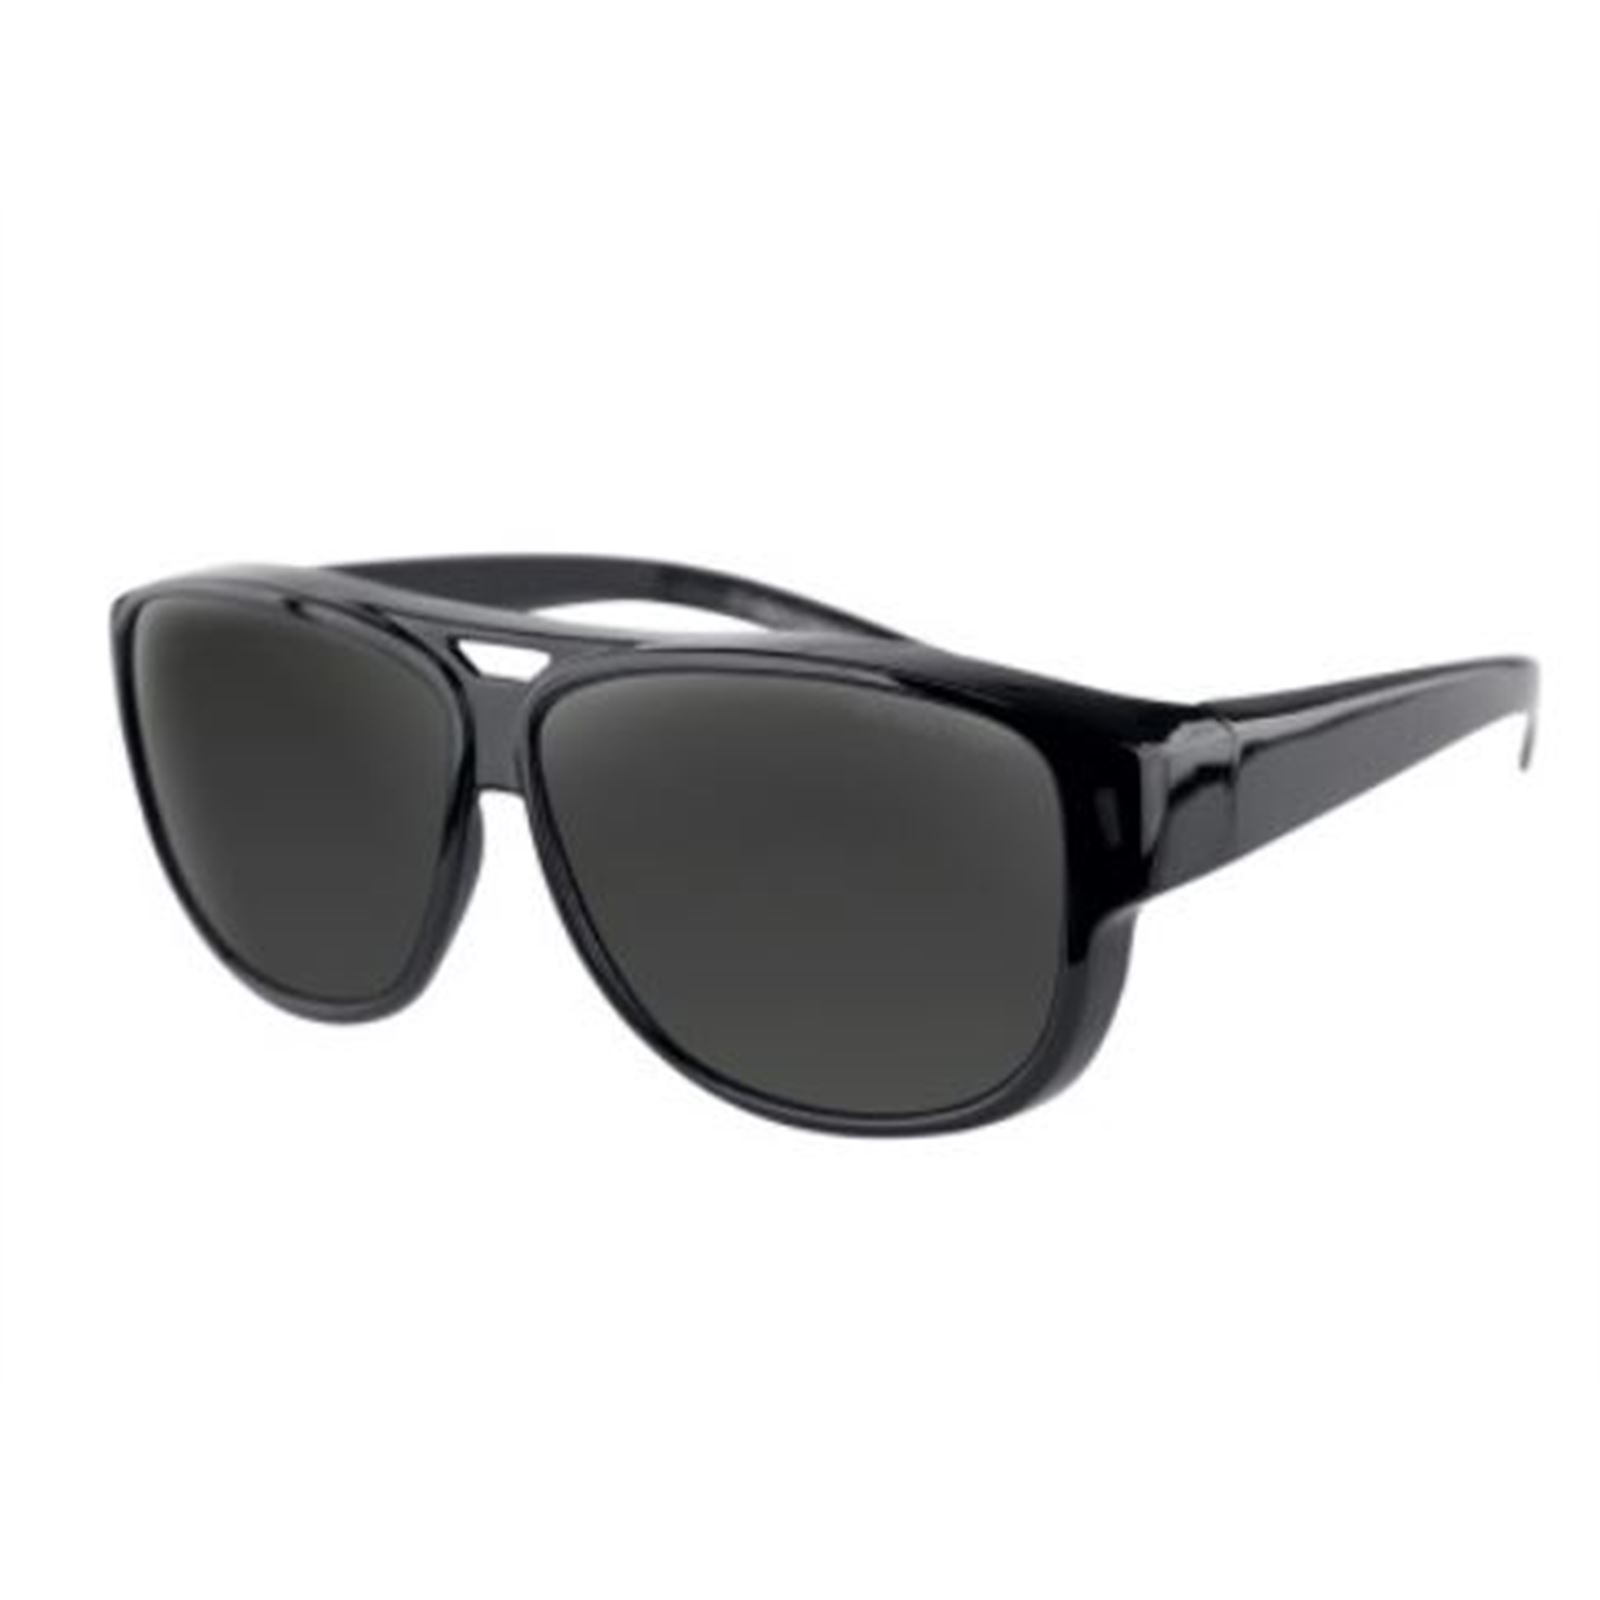 Bobster Altitude OTG Sunglasses - Black